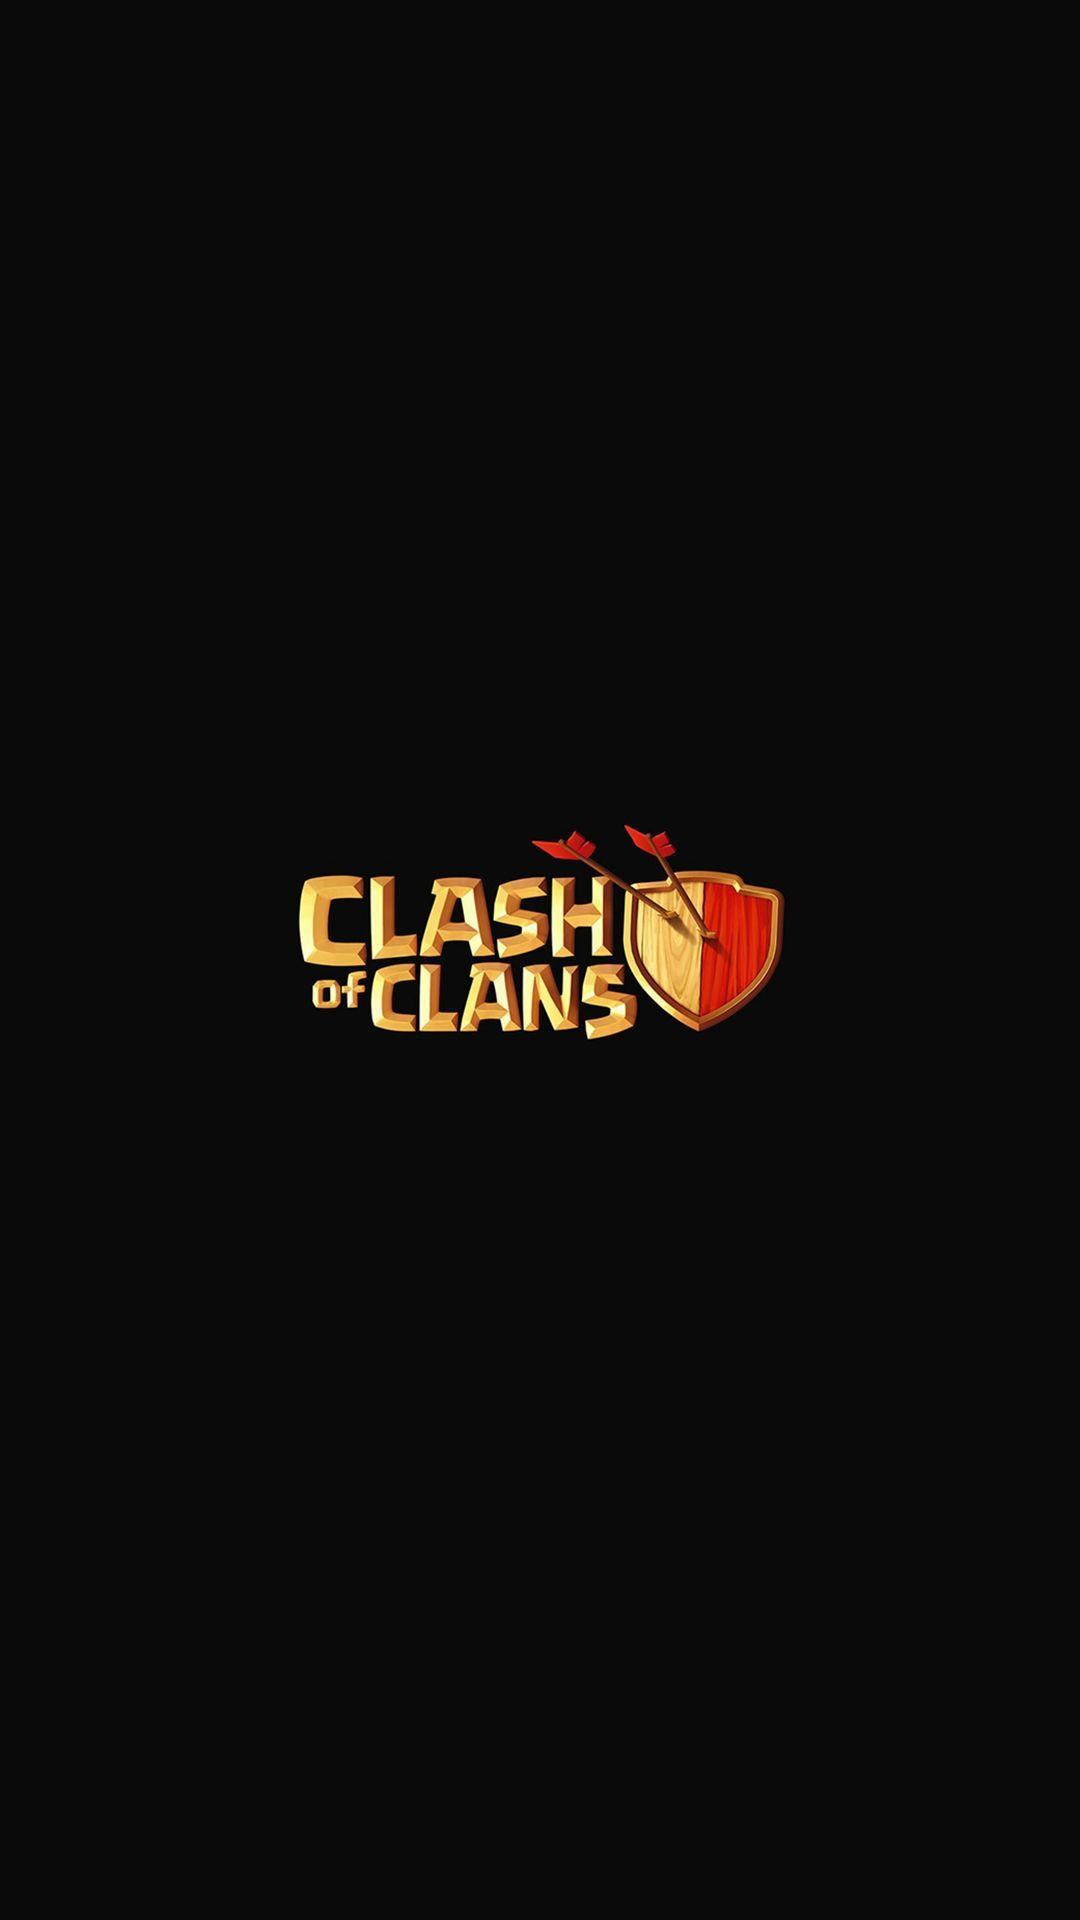 Clash Of Clans Logo Art Dark Game IPhone 6 Wallpaper Download. IPhone Wallpaper, IPad Wallpaper One S. Clash Of Clans Logo, Clash Of Clans Hack, Clash Of Clans